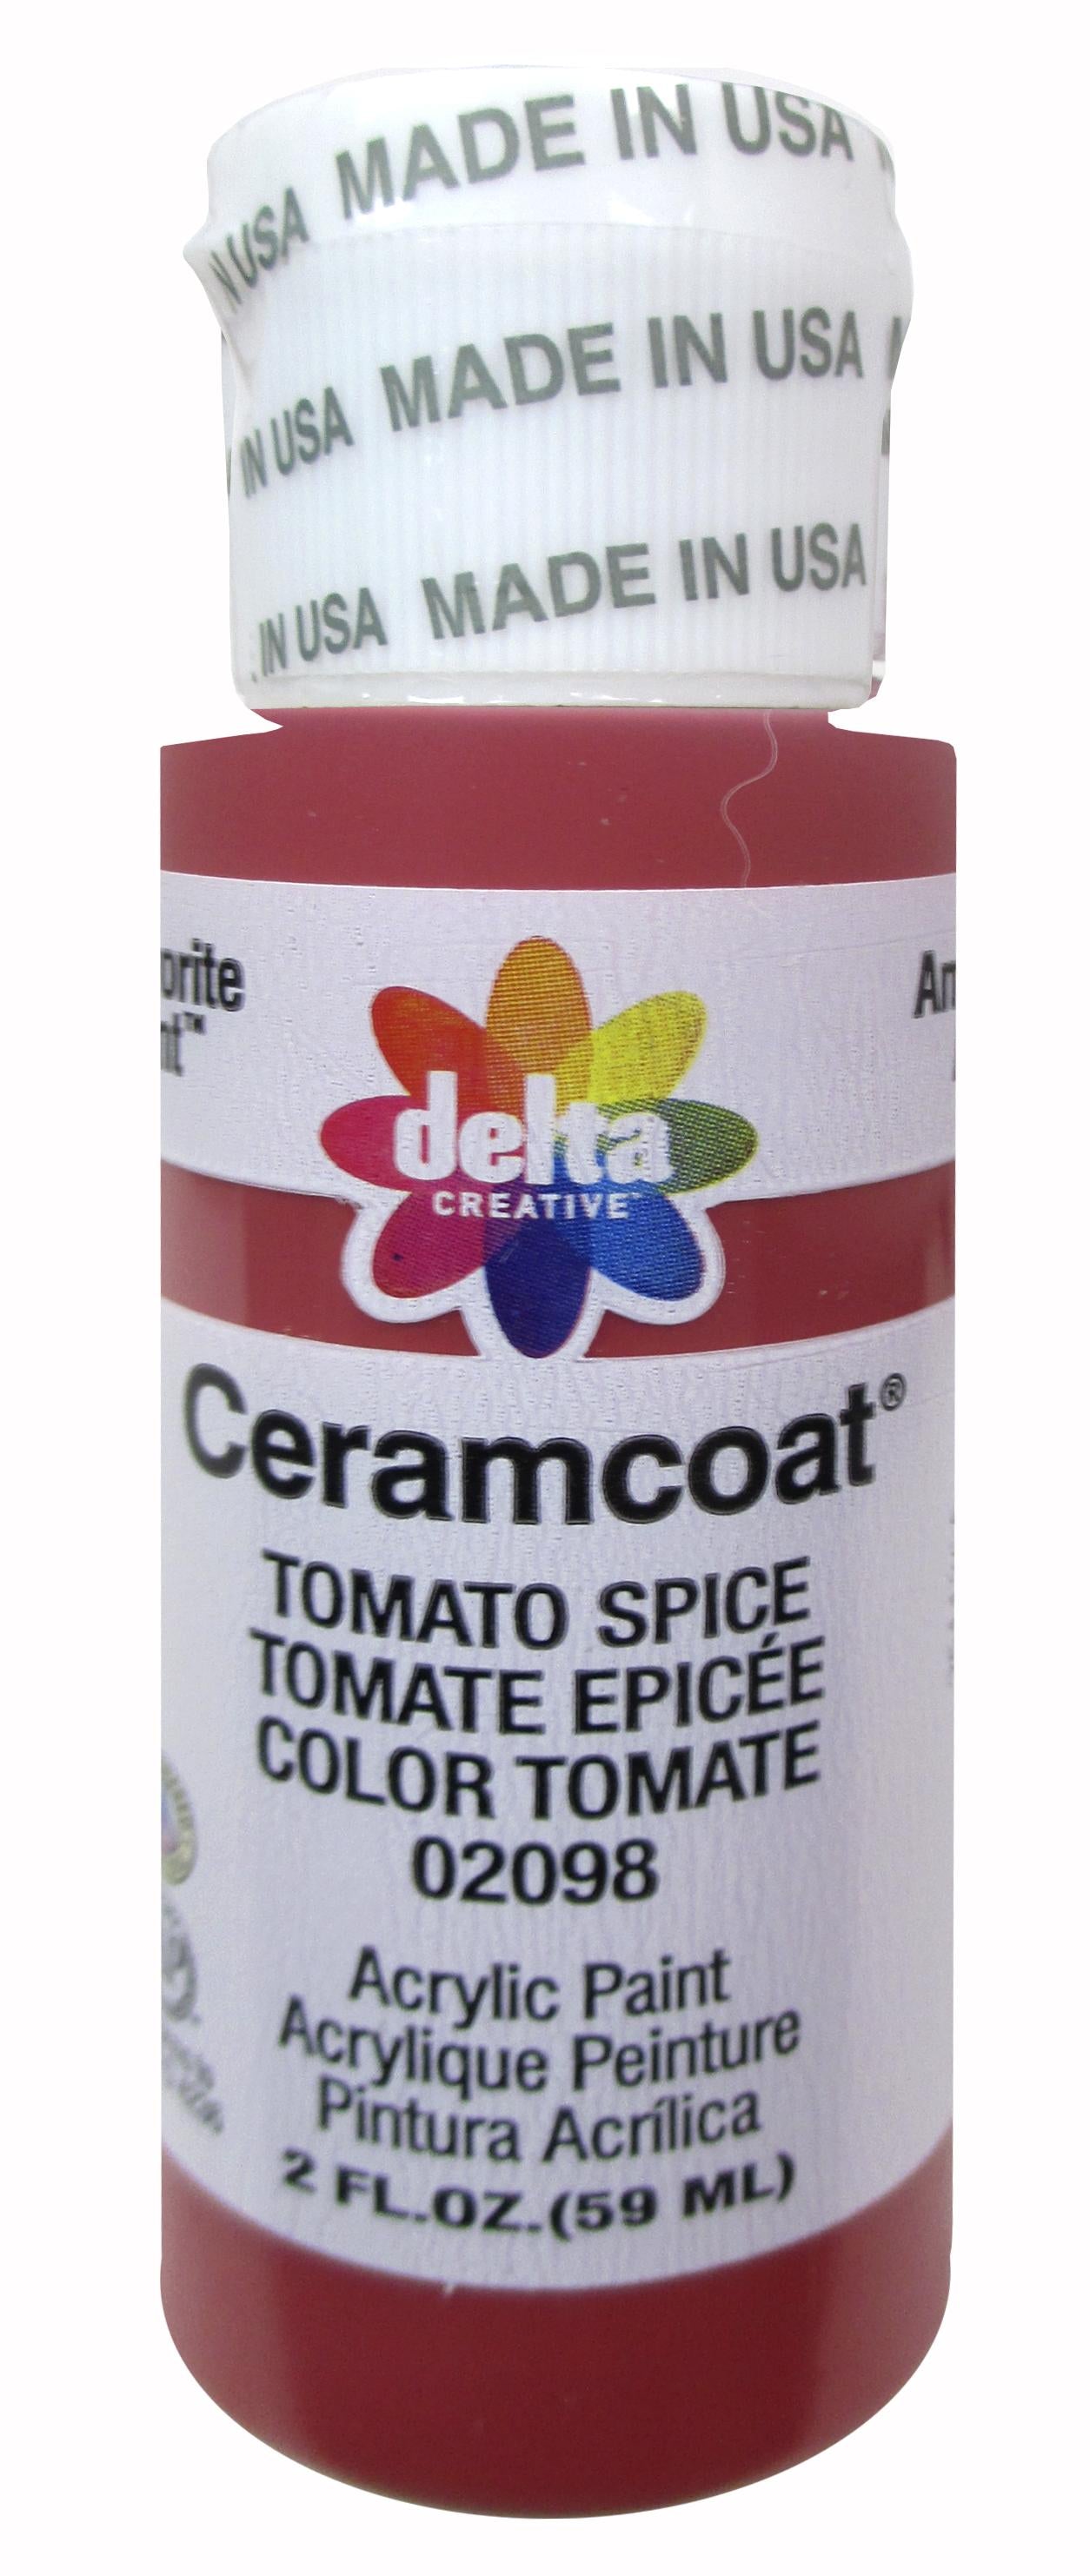 CERAMCOAT Acrylic Paint 59ml 2floz - Tomato Spice – The Scrapbooker's  Confetti Box